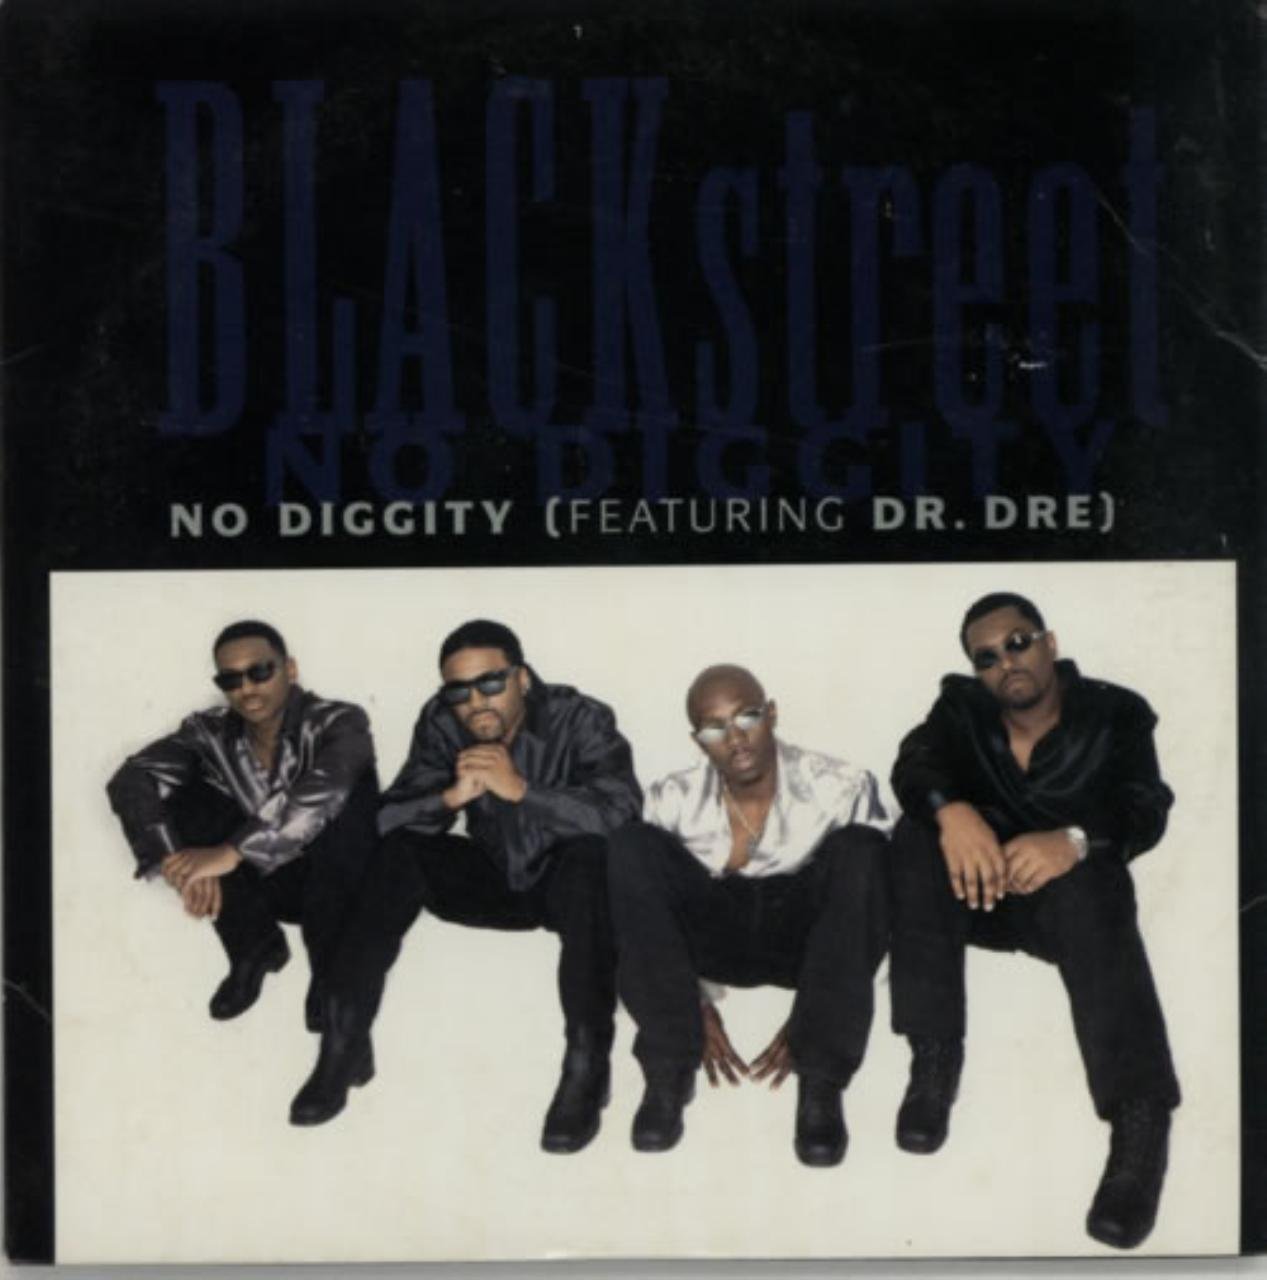 blackstreet no diggity mp3 download